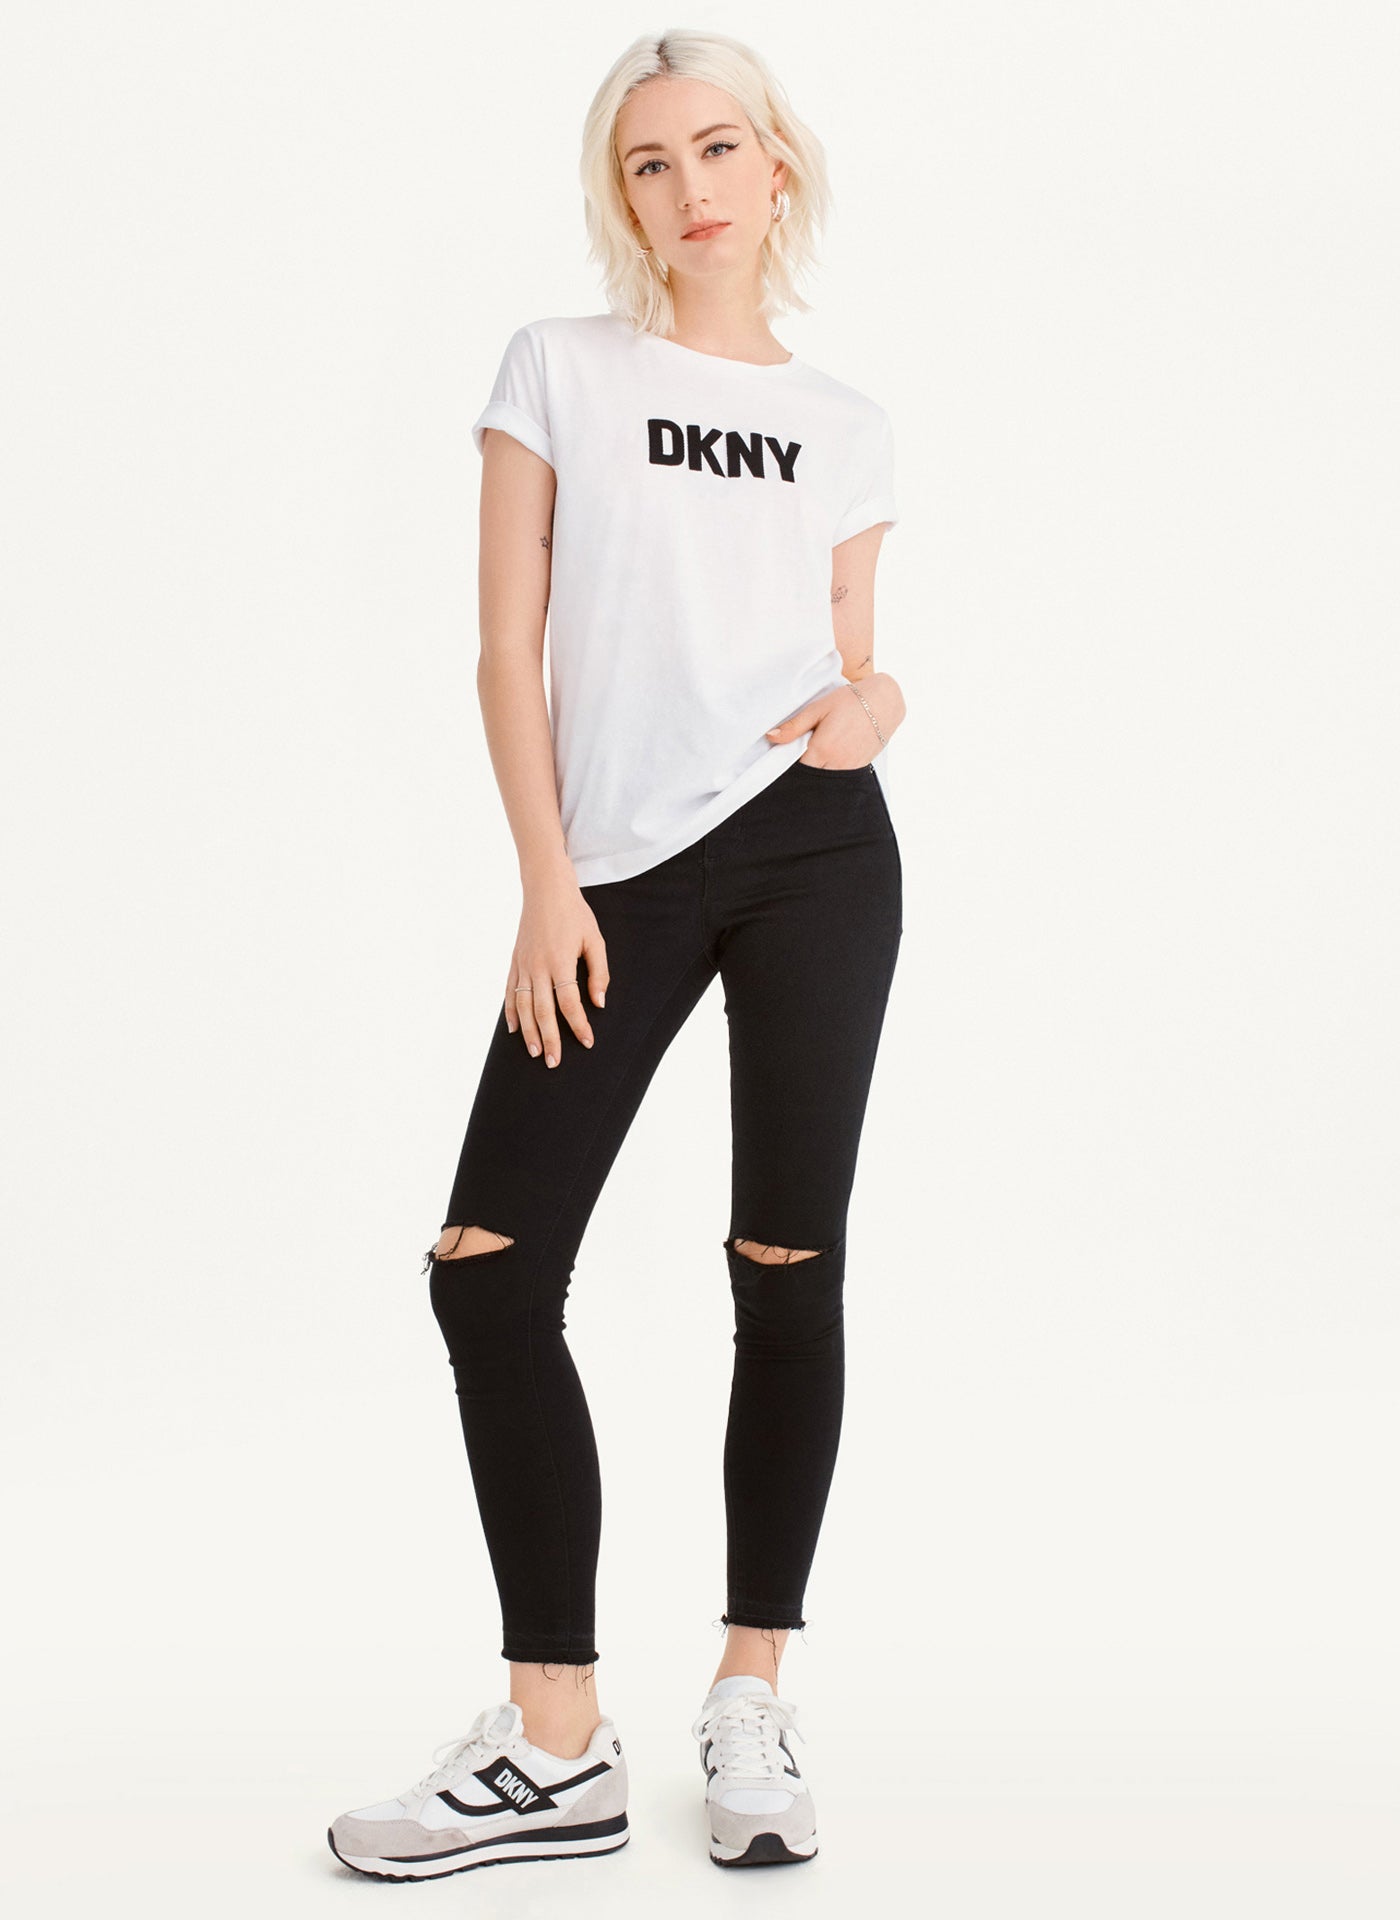 DKNY 453237 Perfect Profile T-Shirt and 50 similar items